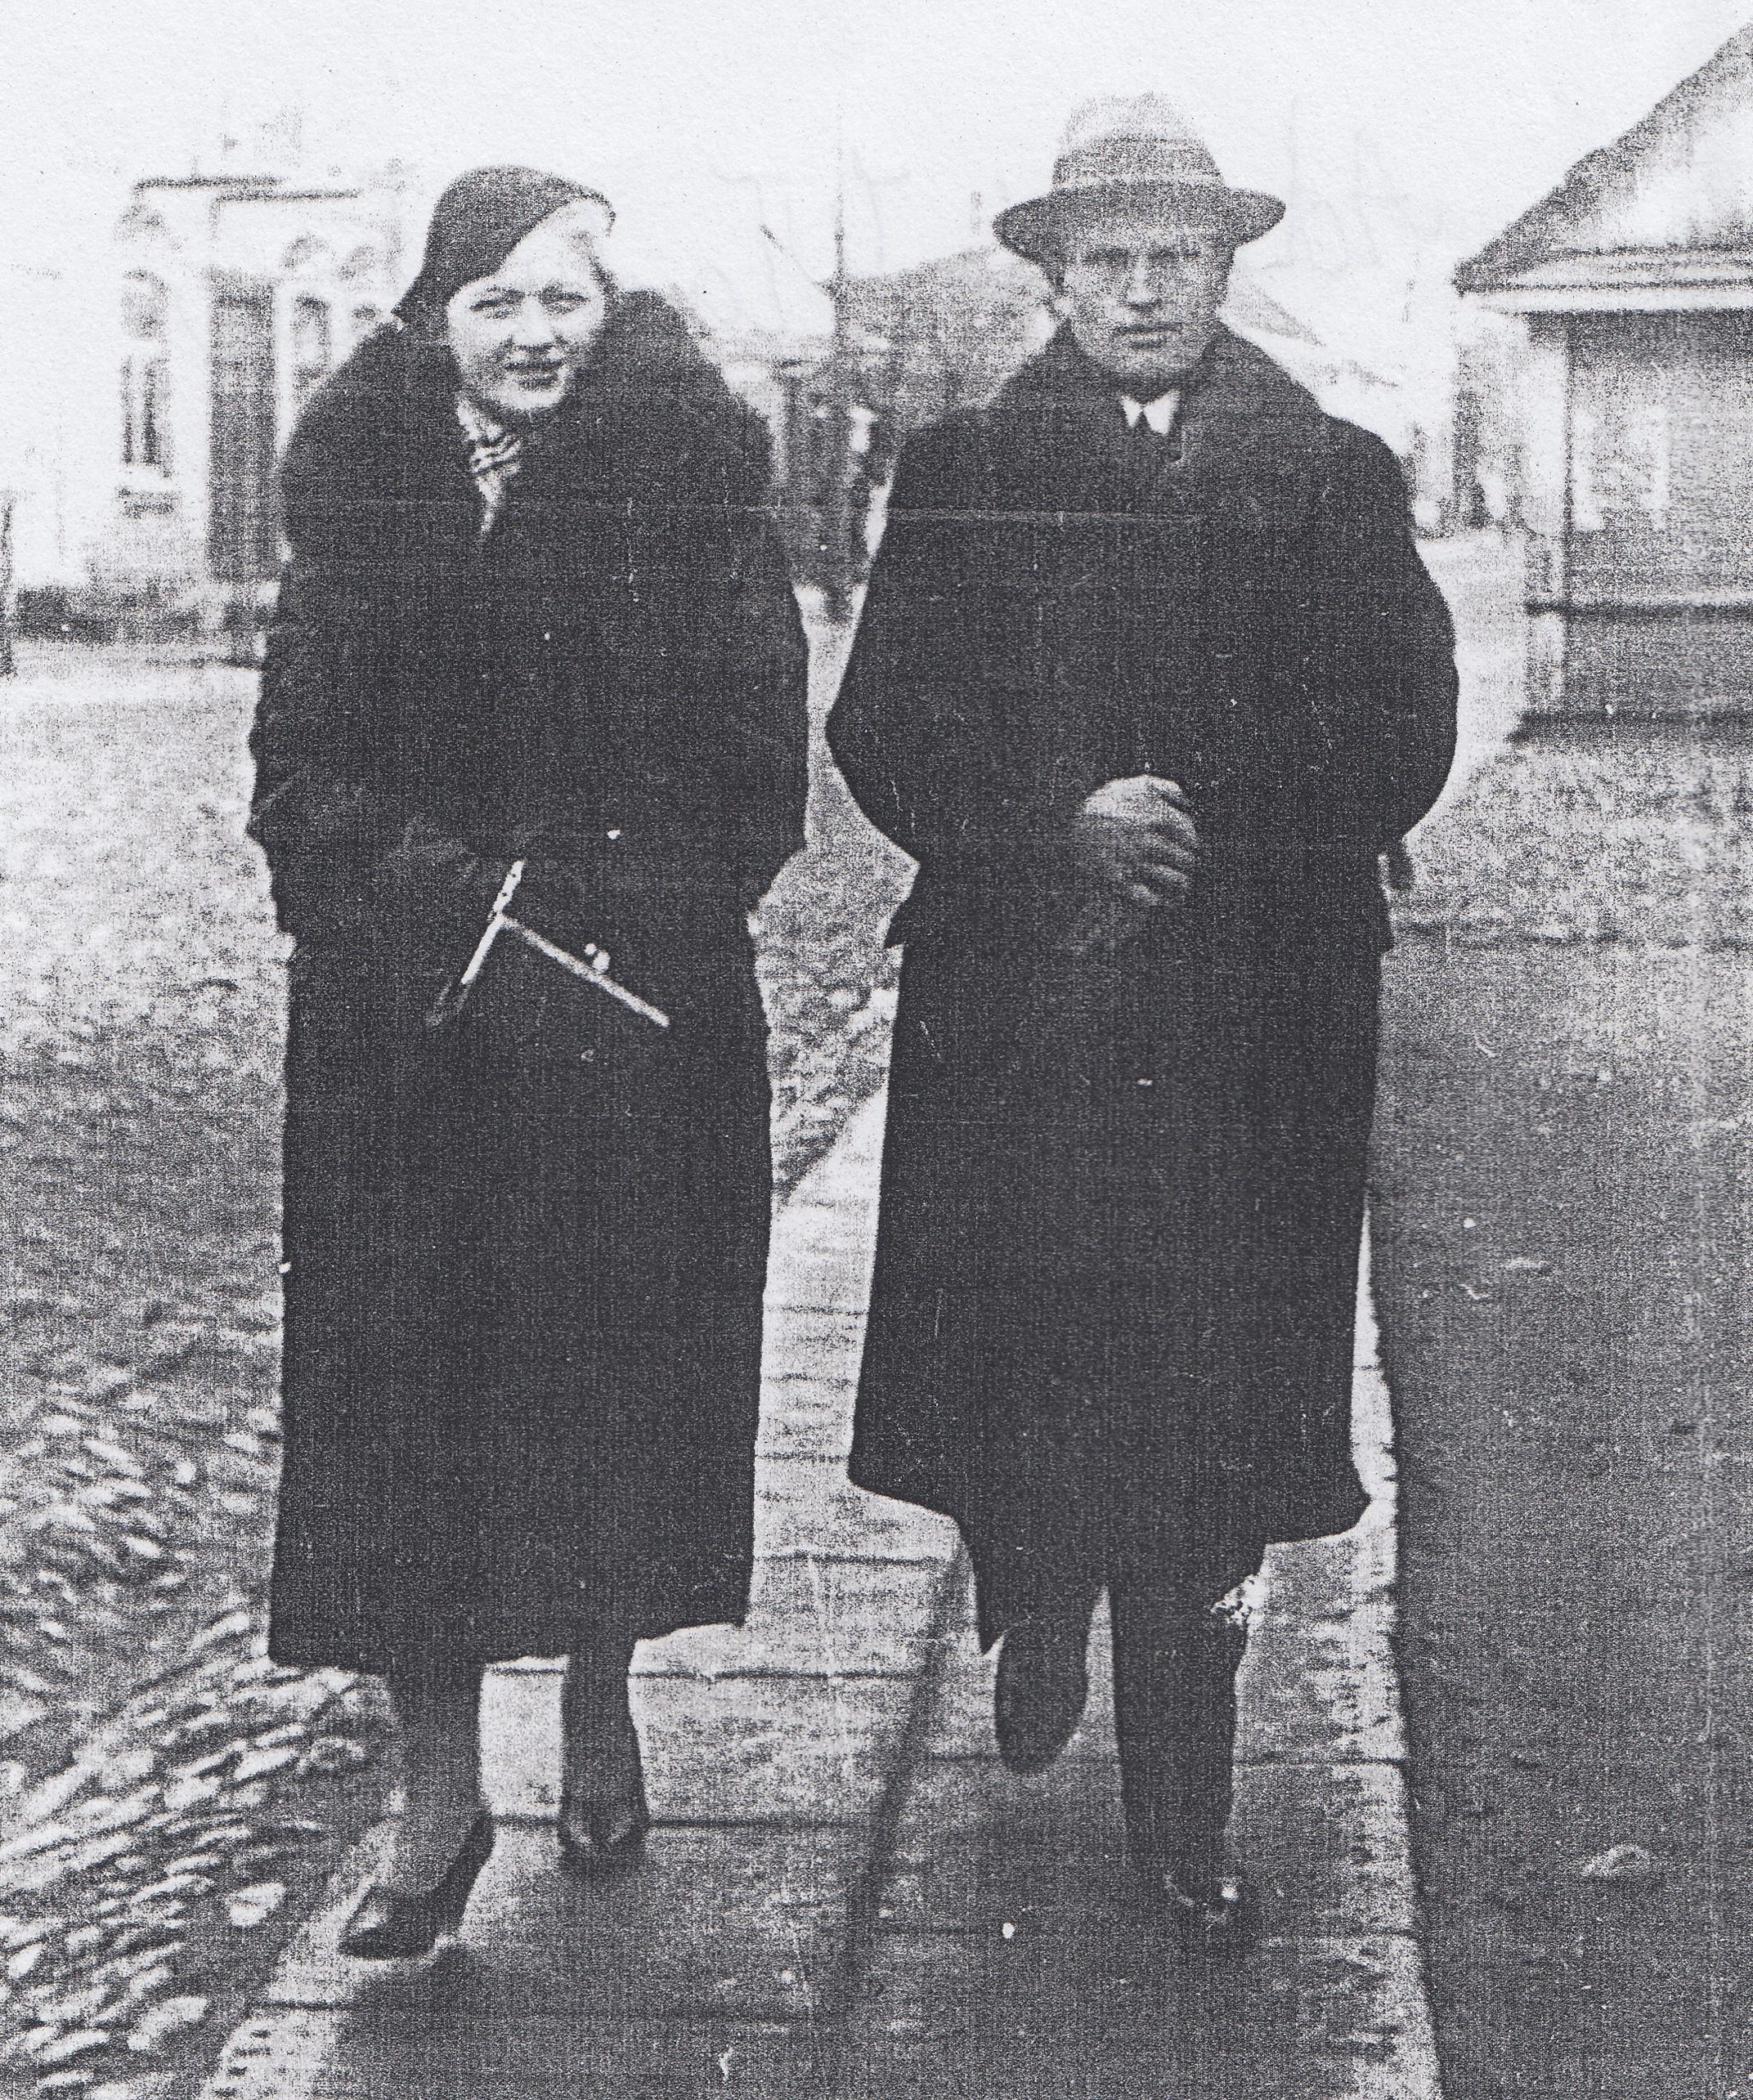 A card from the calendar - Adela and Władysław Łoźny. 28.02.2022